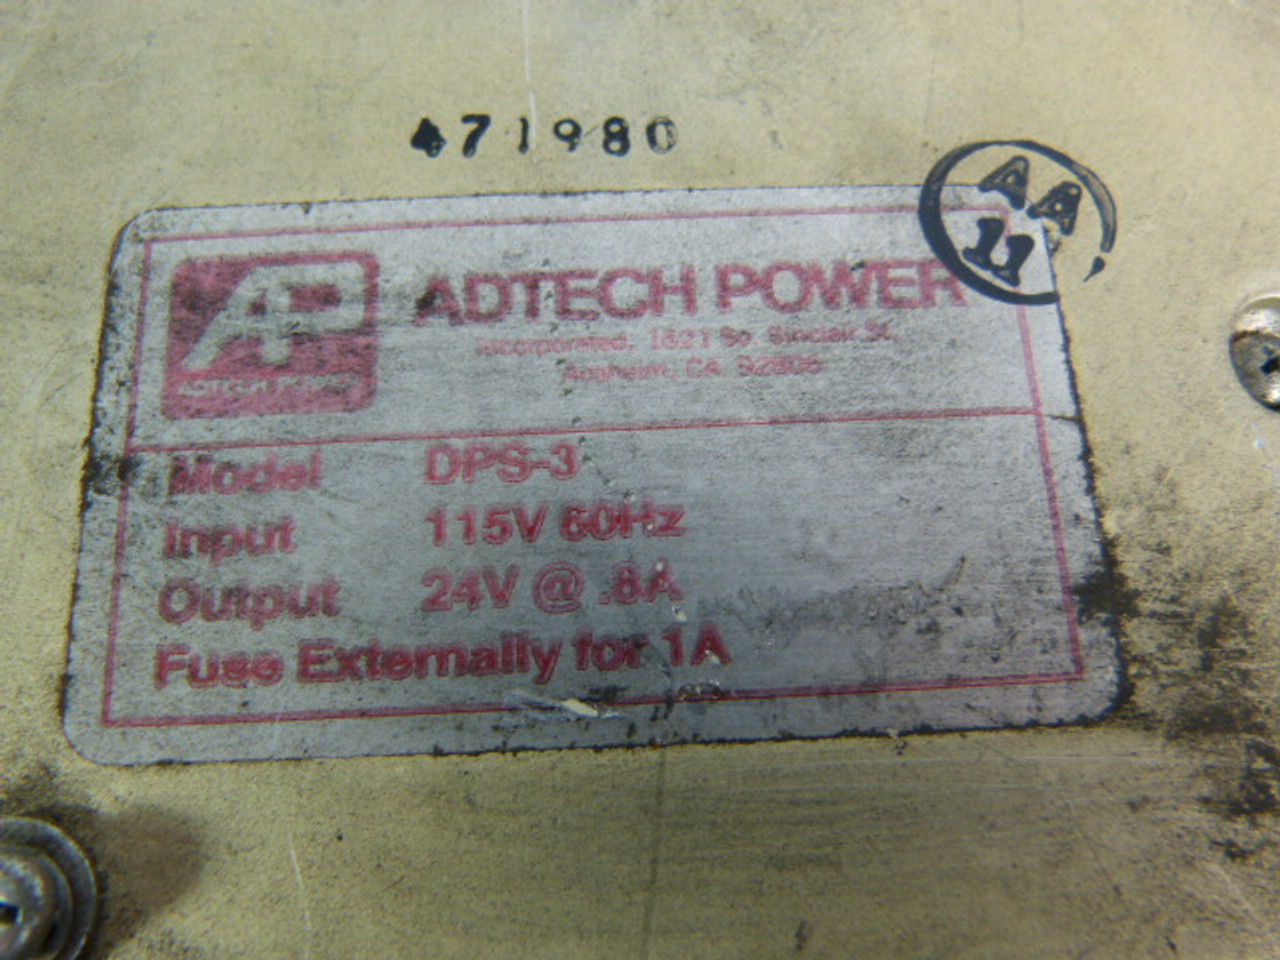 Adtech Power DPS-3 Power Supply Input 115V 60Hz 24V .8A USED